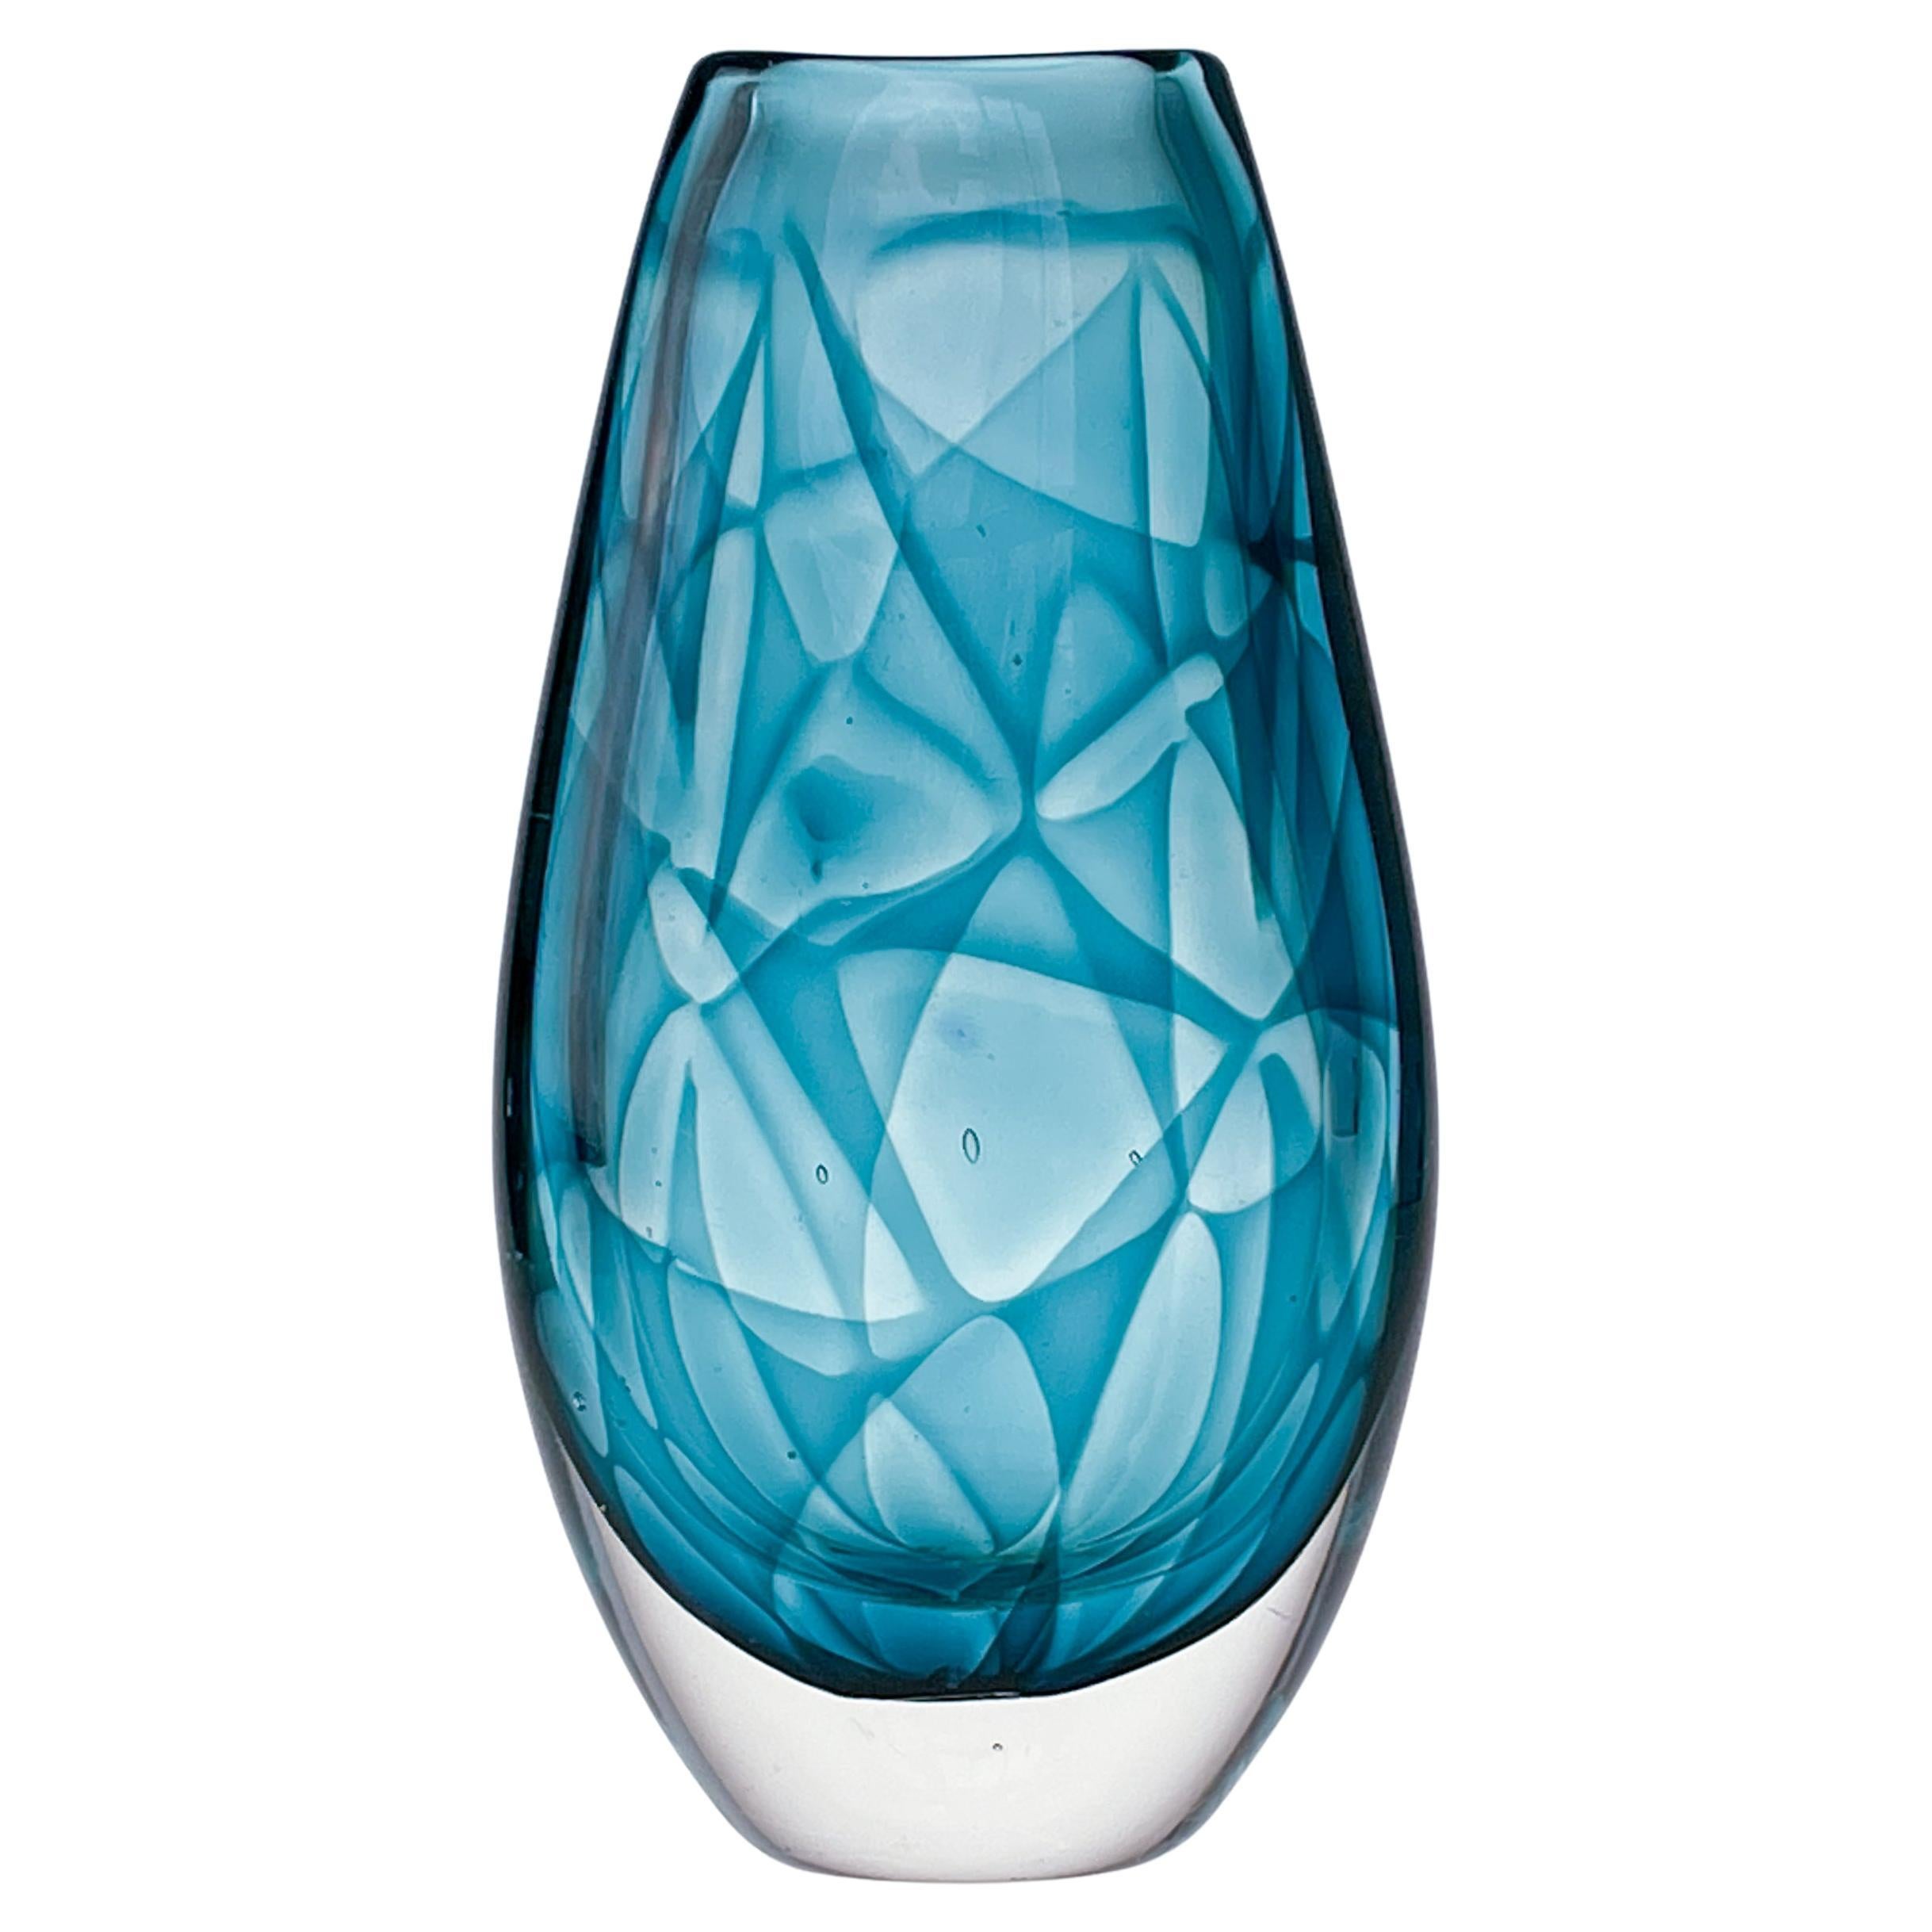 Vicke Lindstrand vase d'art moderne scandinave en verre couleur turquoise, années 1960

Objet d'art / vase en cristal soufflé 